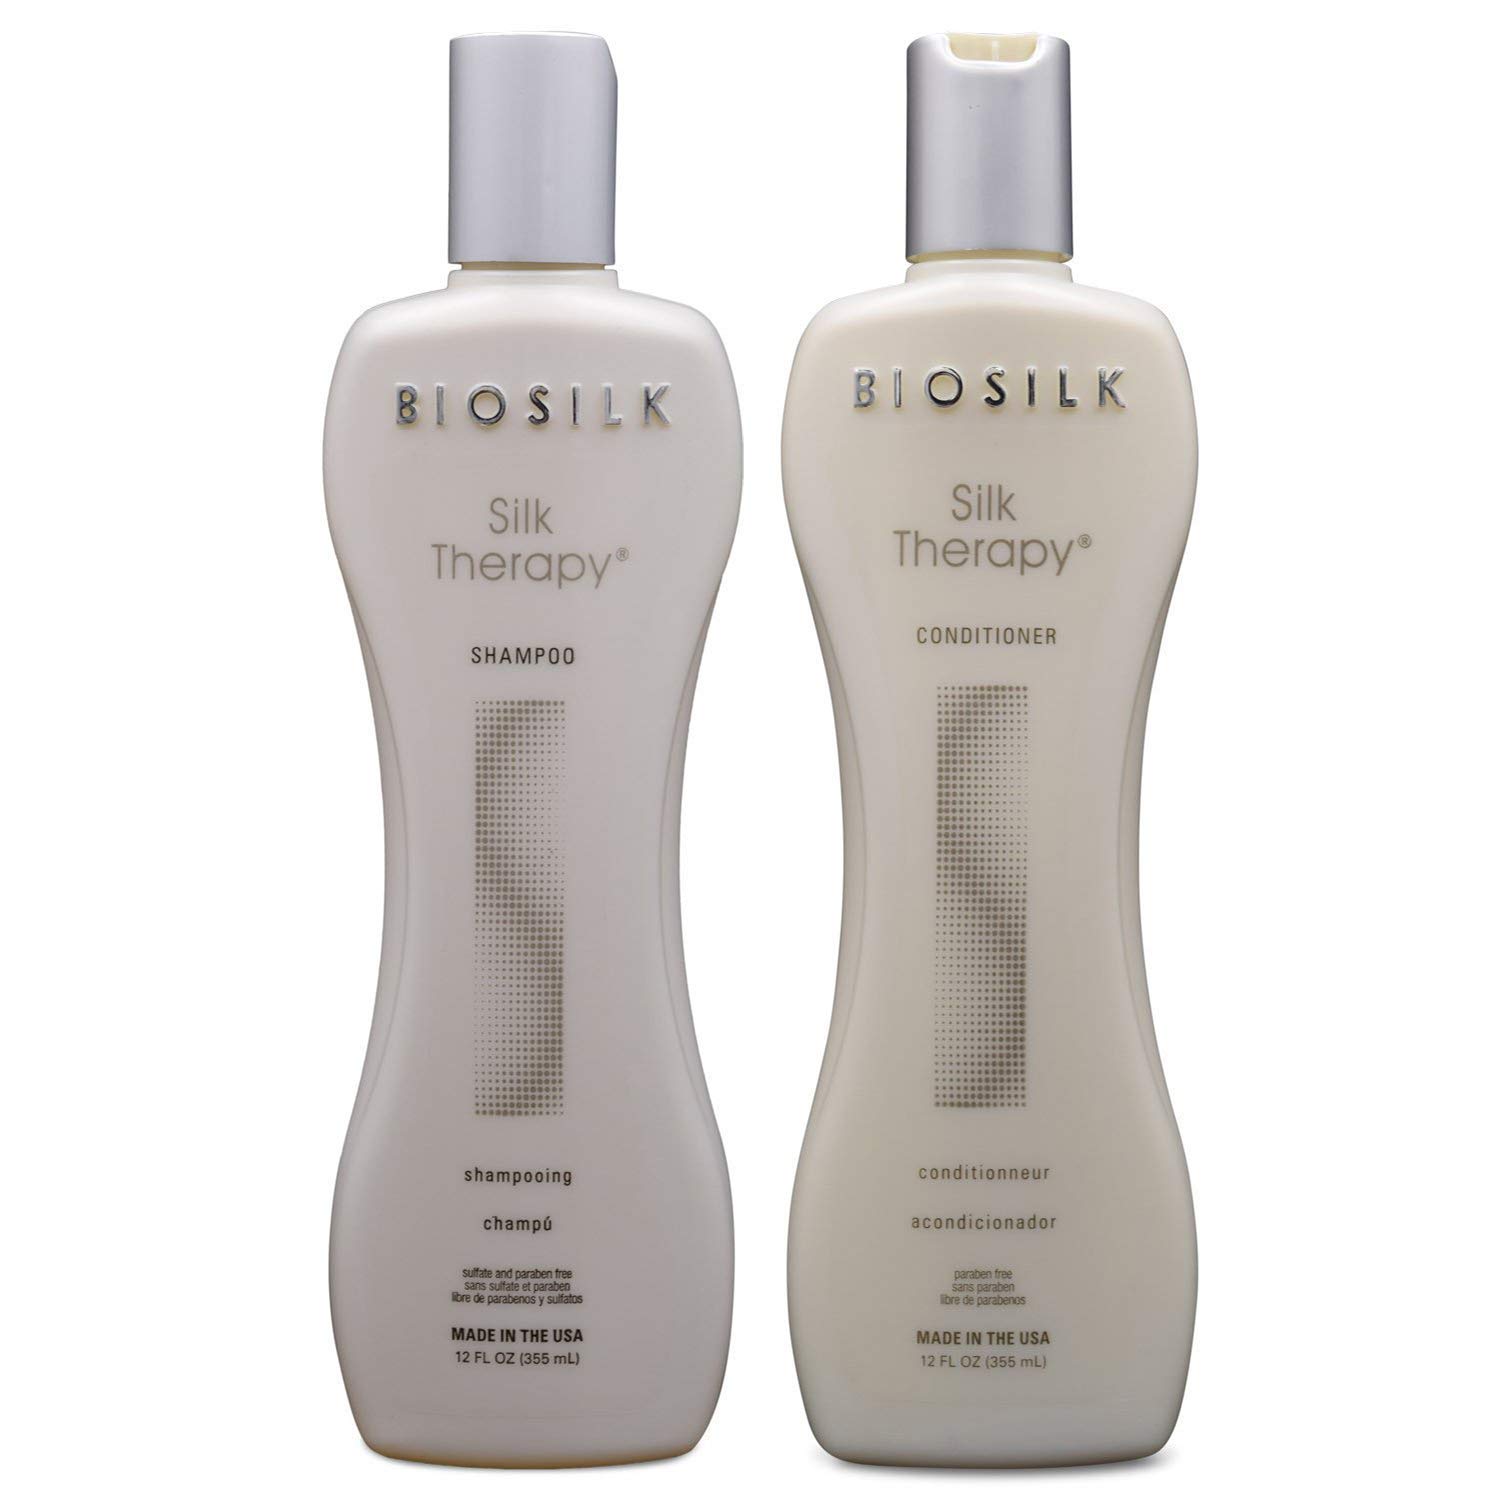 12-Oz Biosilk Silk Therapy Duo Shampoo and Conditioner Set $12 + Free Shipping w/ Prime or $25+